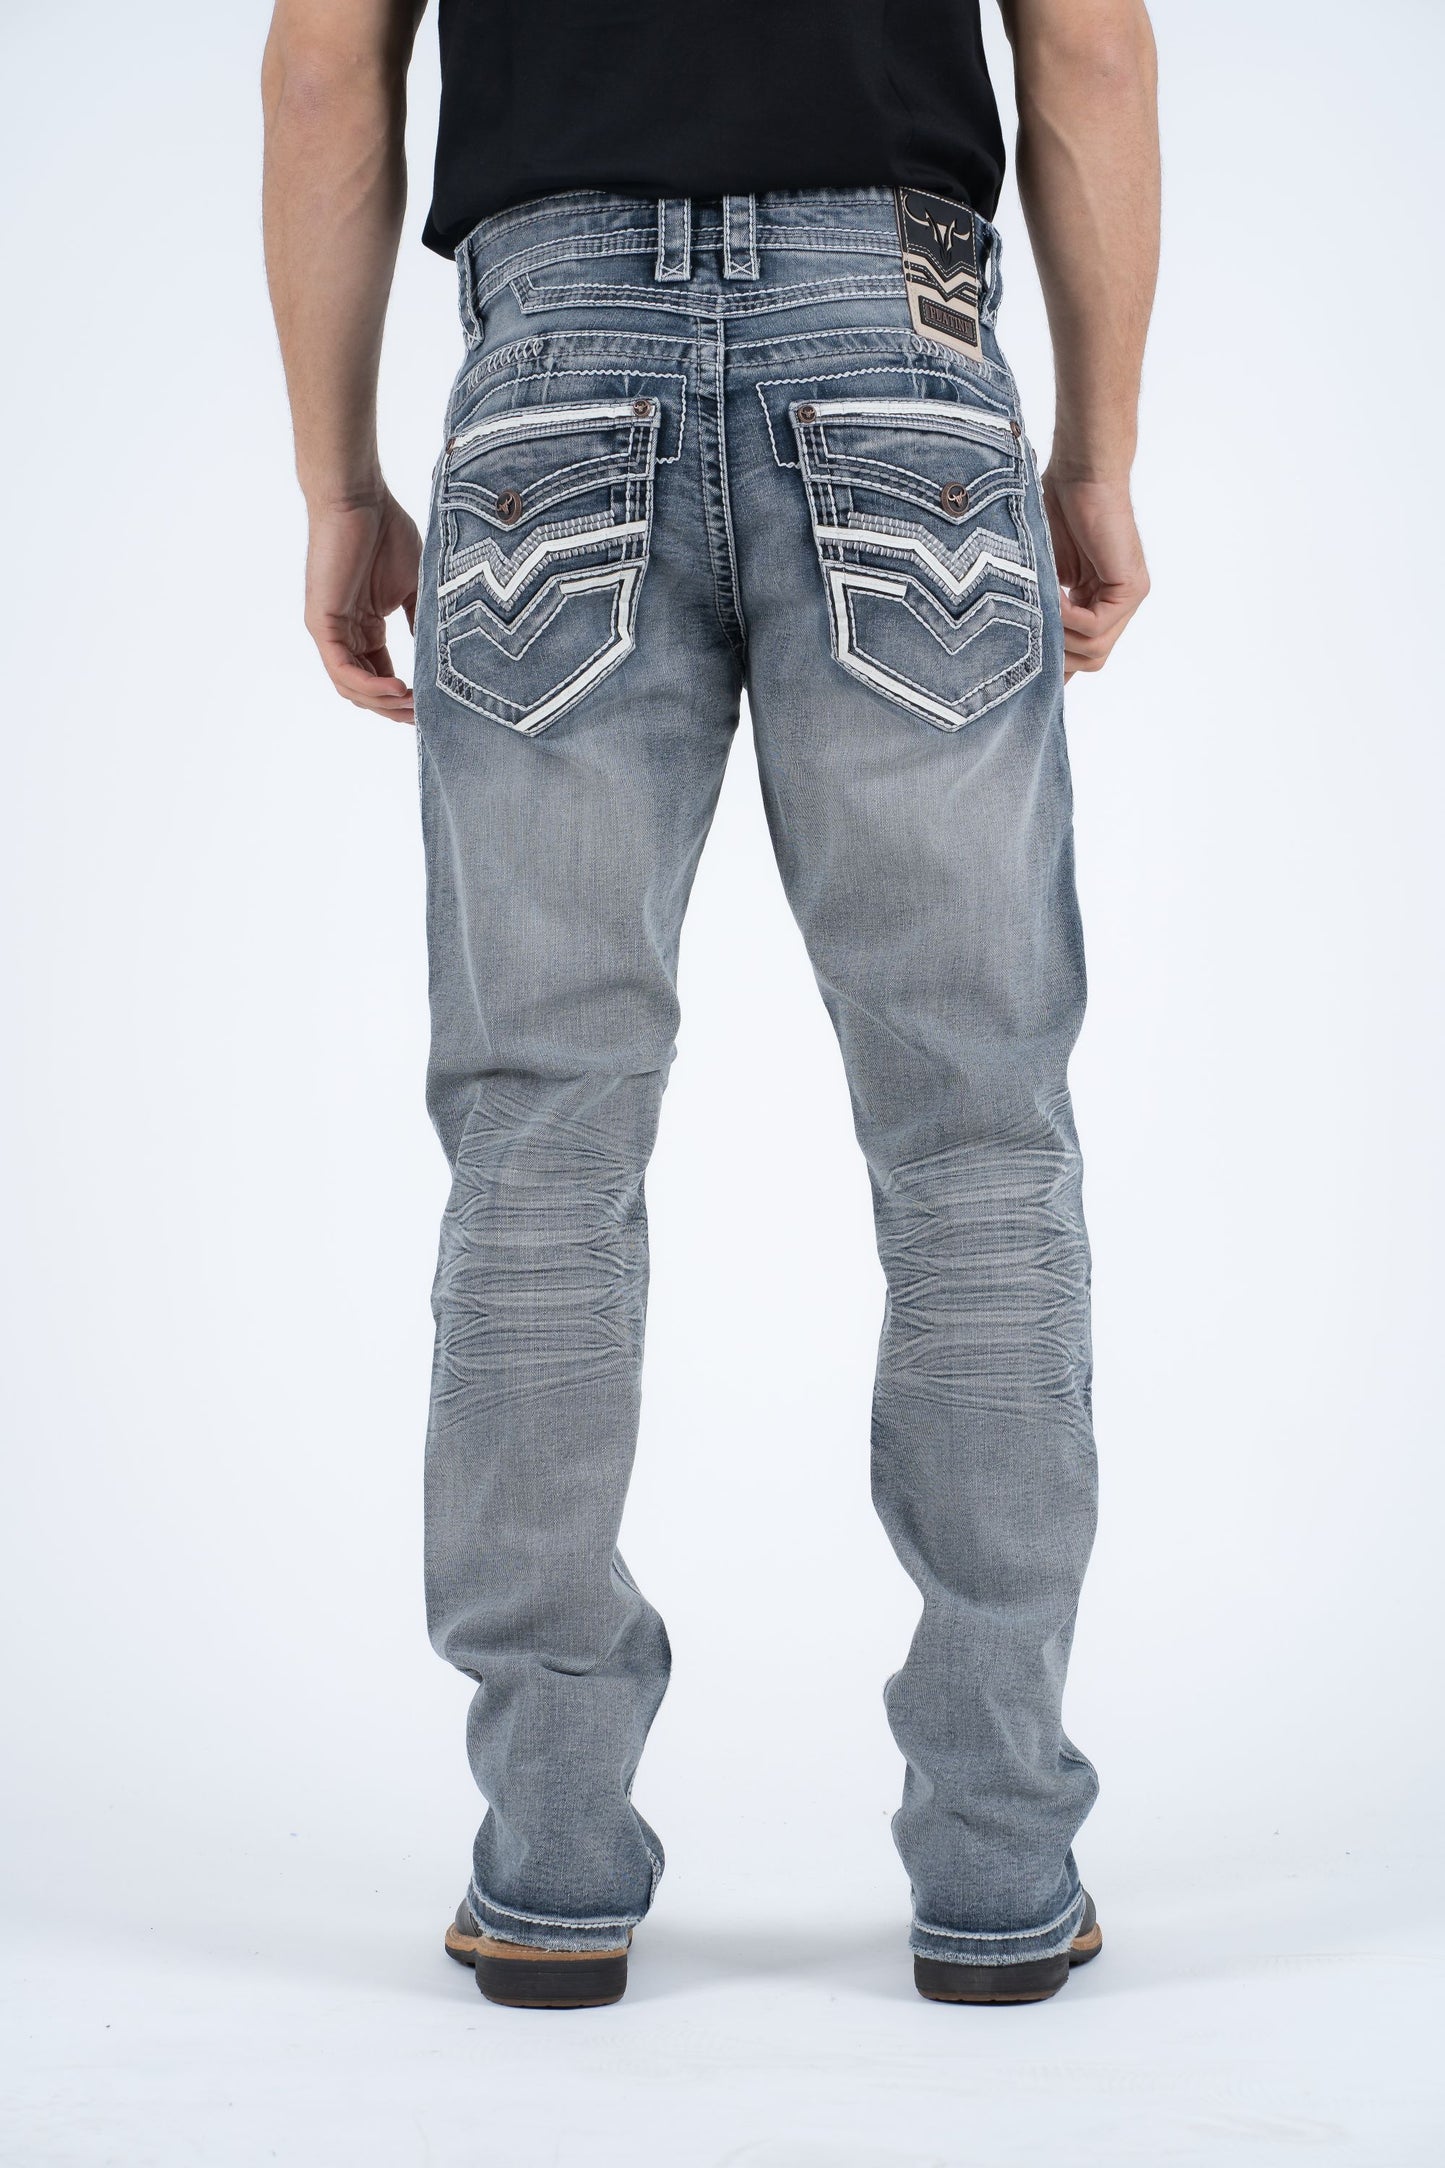 Holt Men's Blue Grey Slim Boot Cut Jeans